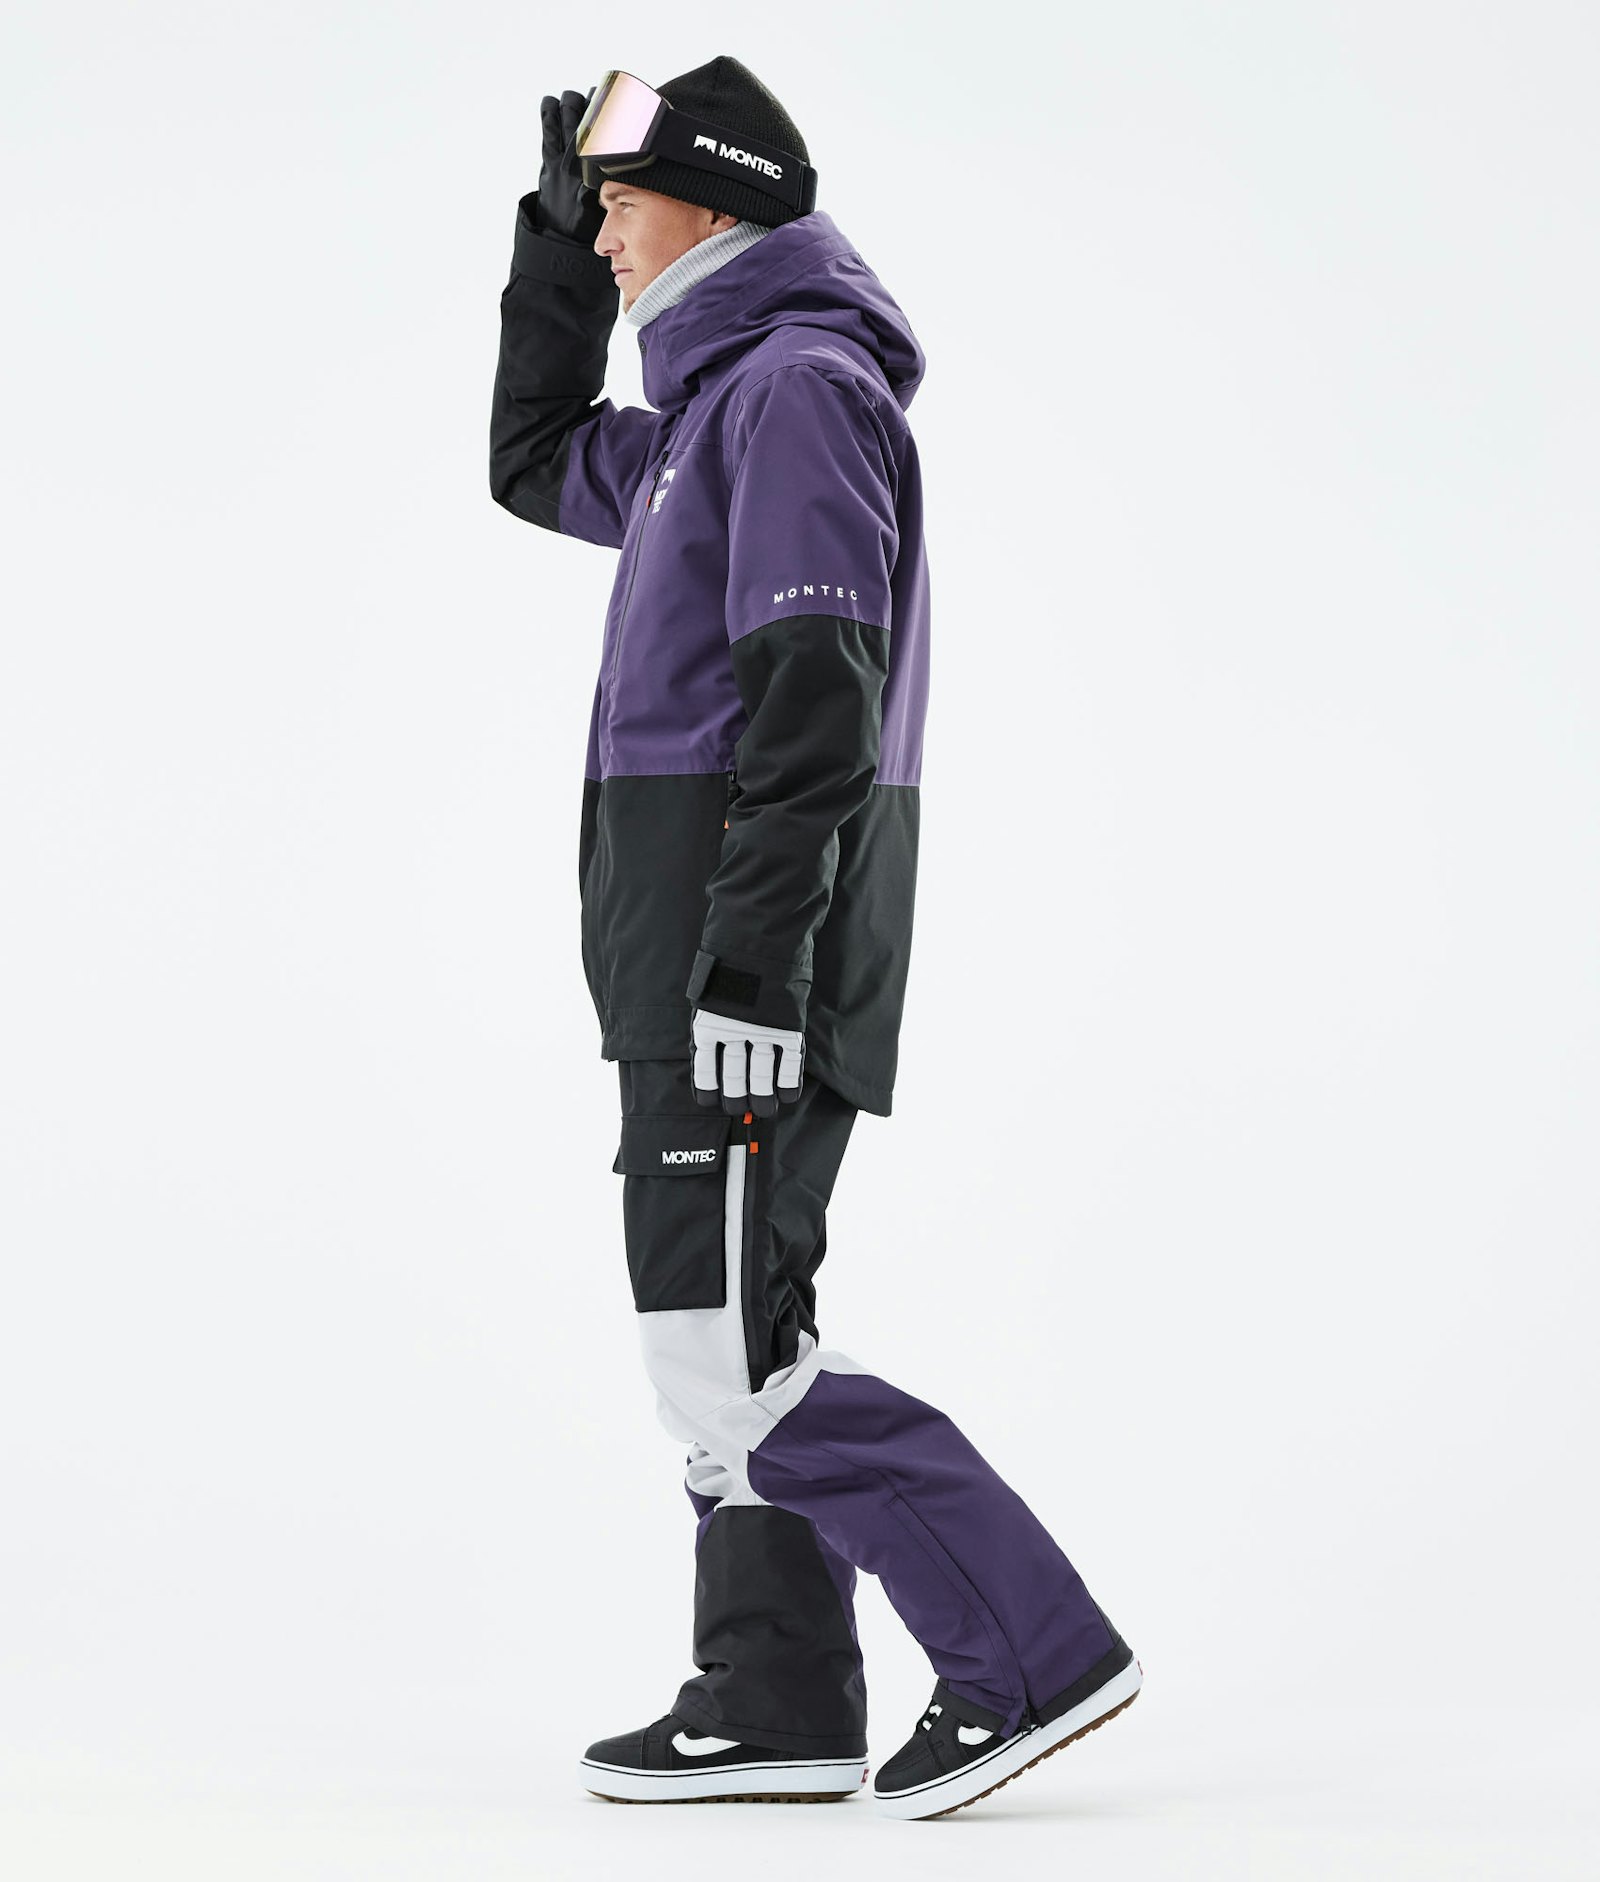 Fawk 2021 Veste Snowboard Homme Purple/Black